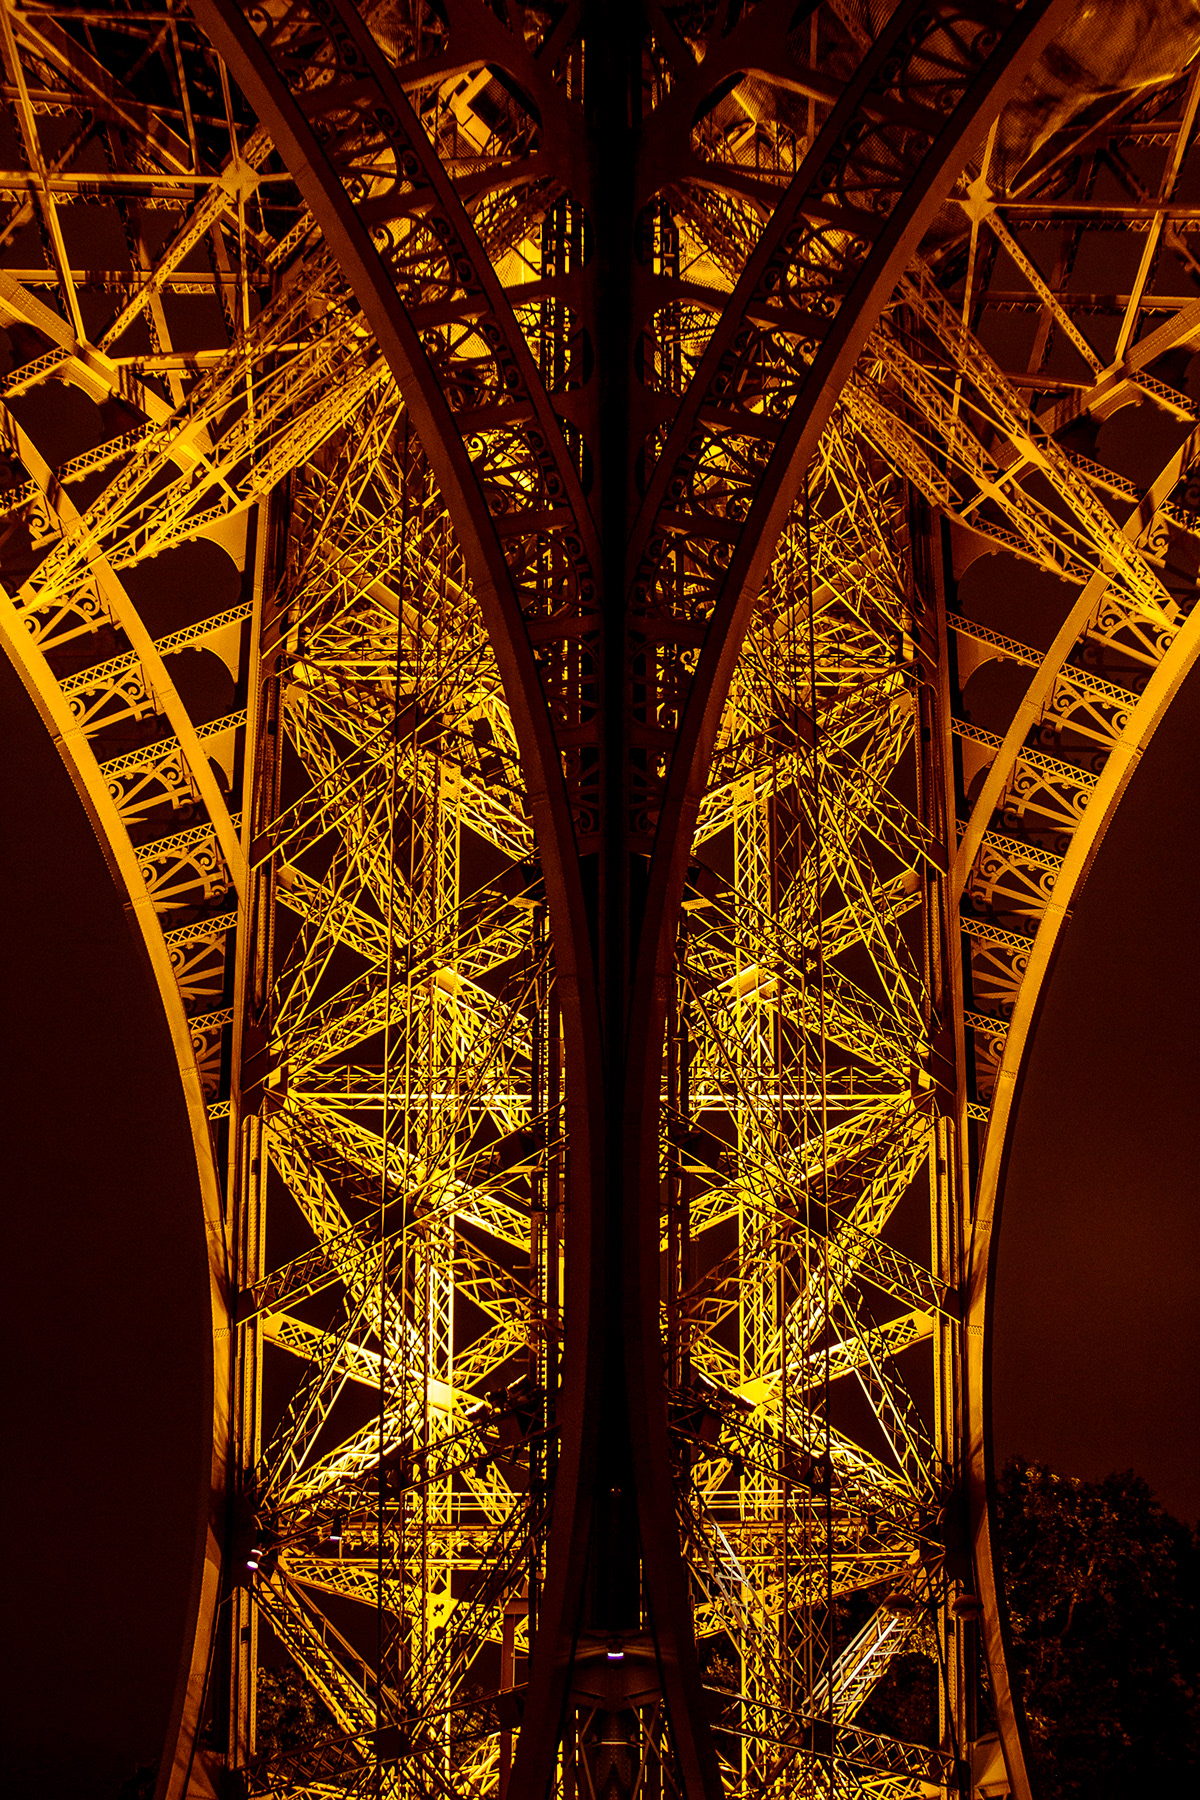 eiffel tower tower Paris night lights monument france Travel city